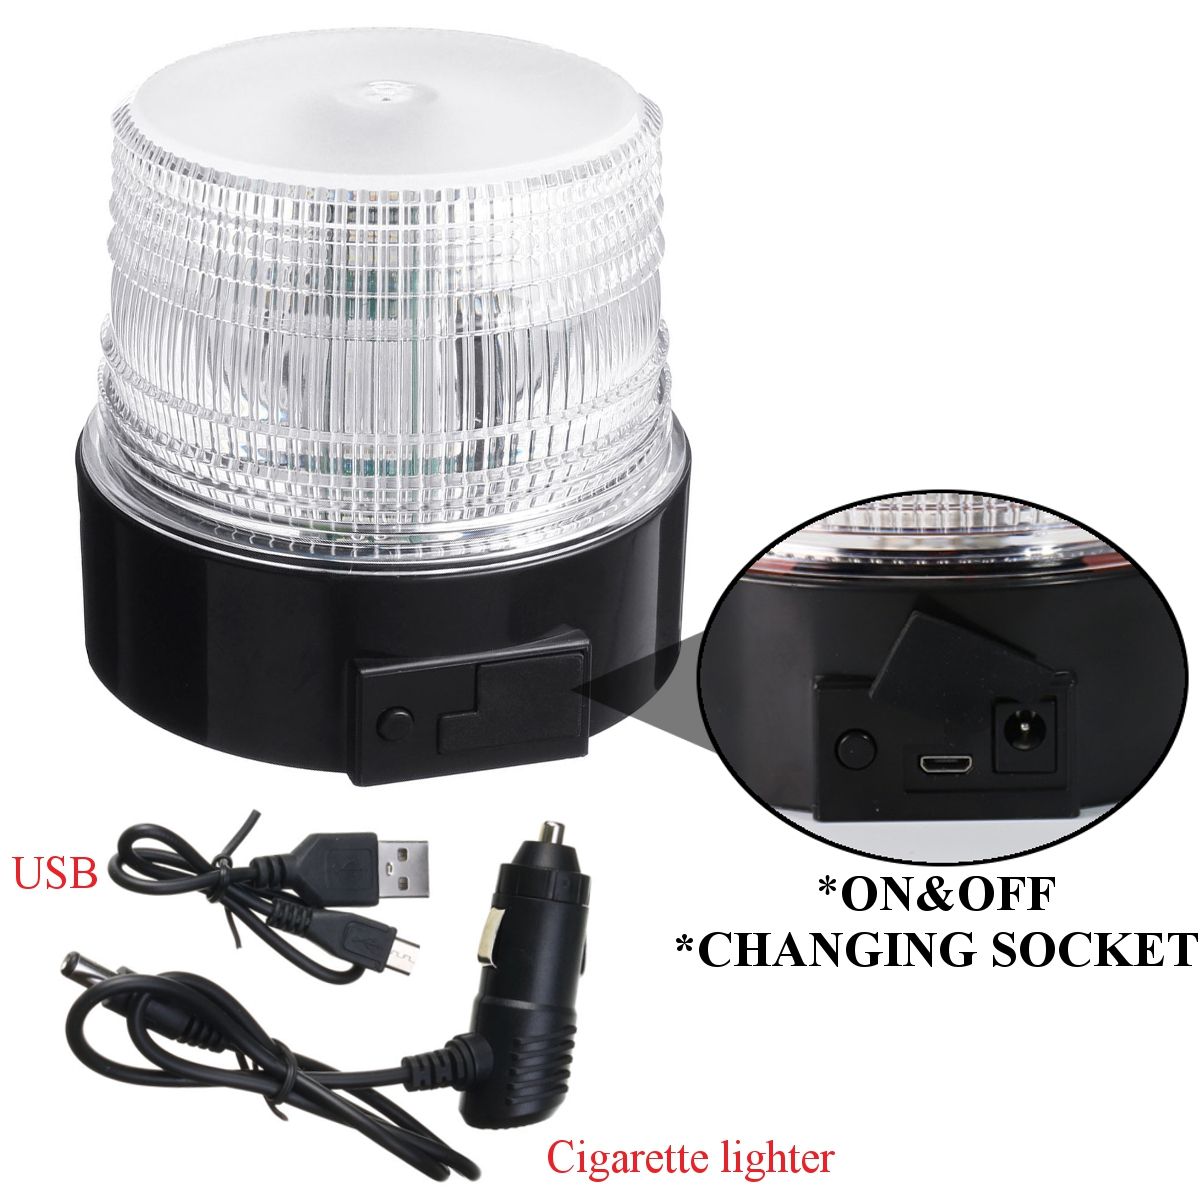 8-Colors-RGB-LED-Magnetic-Warning-Beacon-Light-Emergency-Hazard-Warning-Safety-Flashing-Strobe-Lamp--1727536